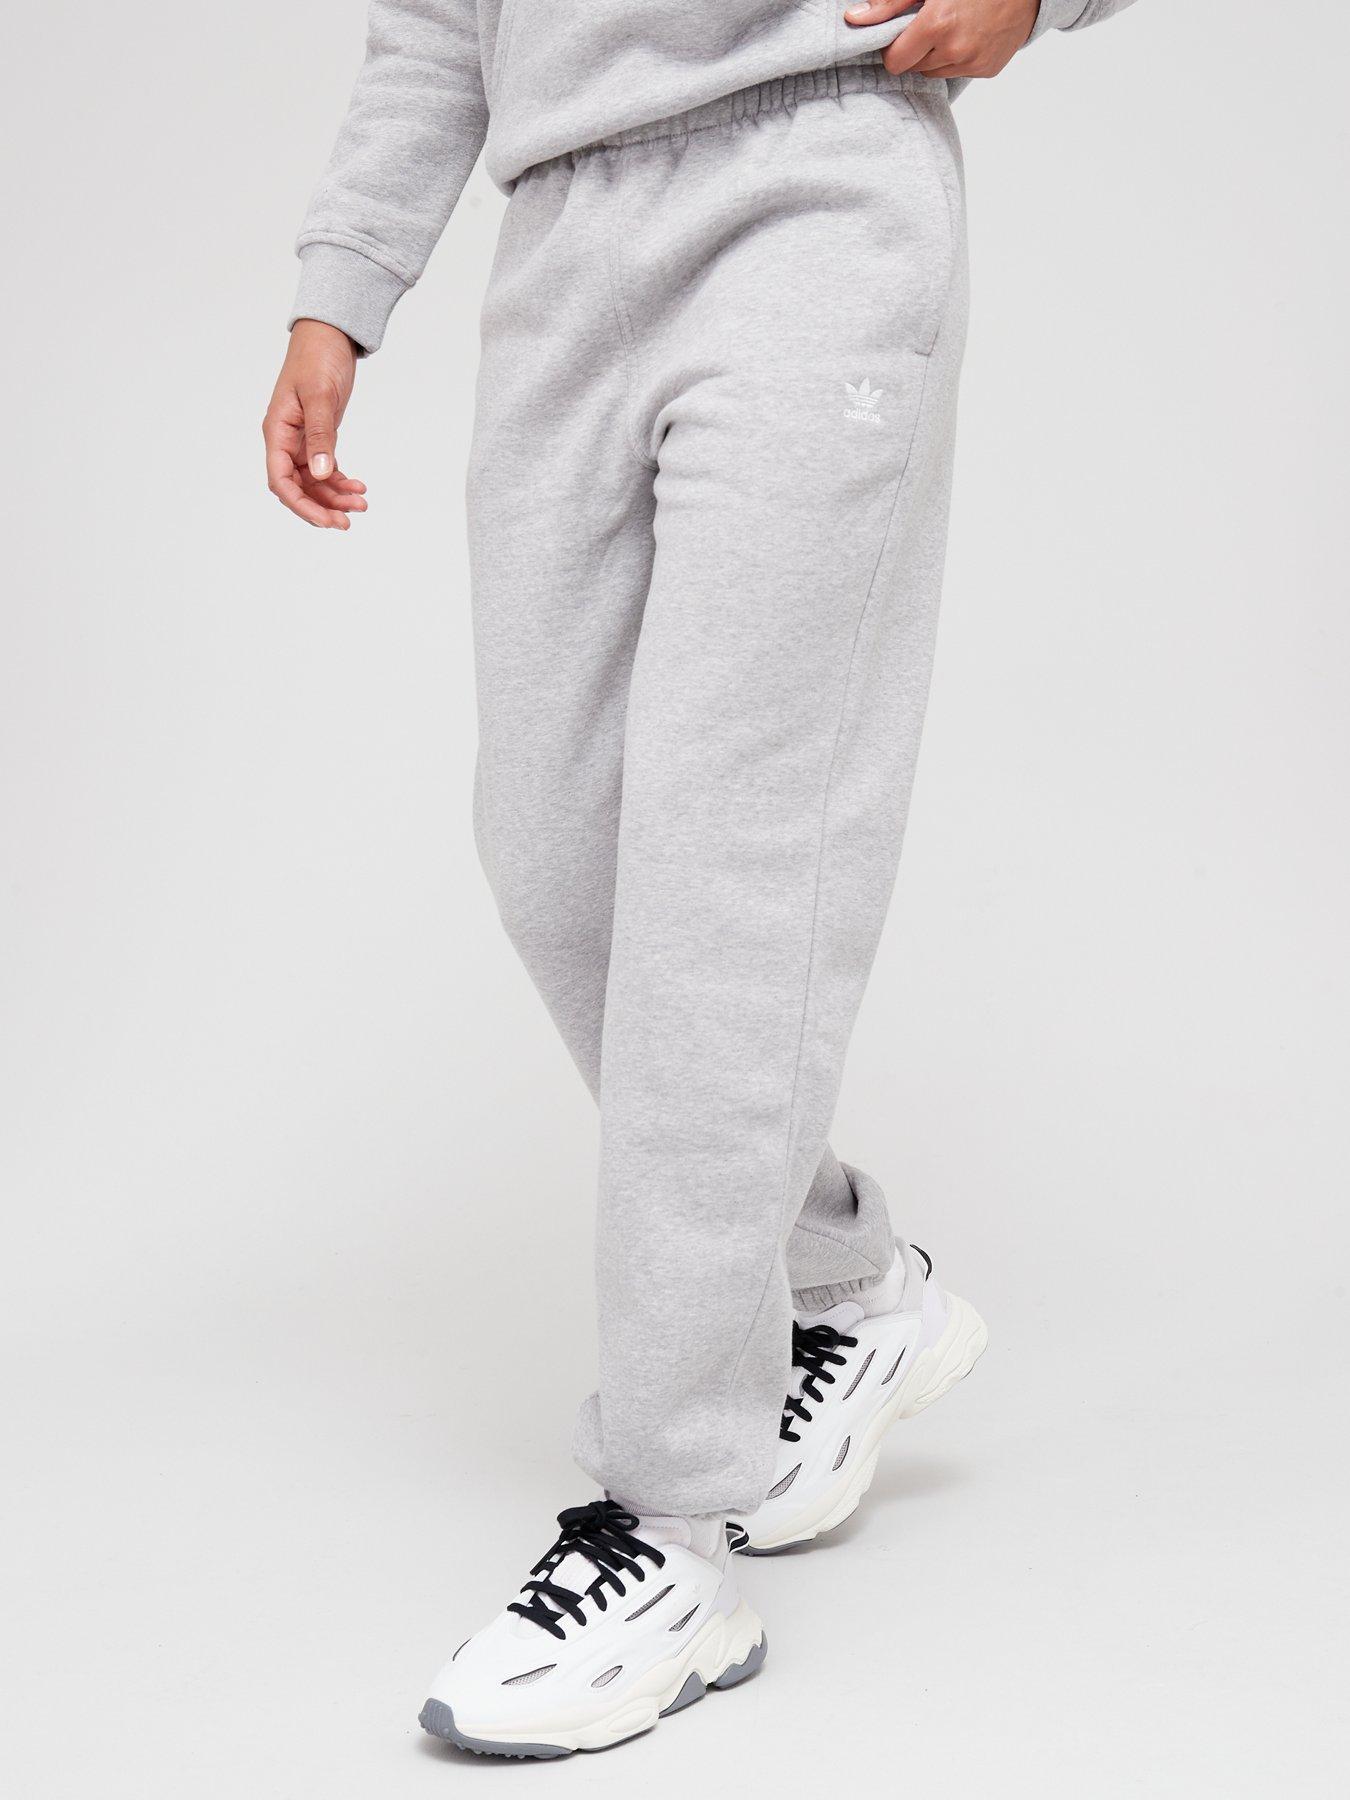 Trousers & Leggings Pants - Medium Grey Heather